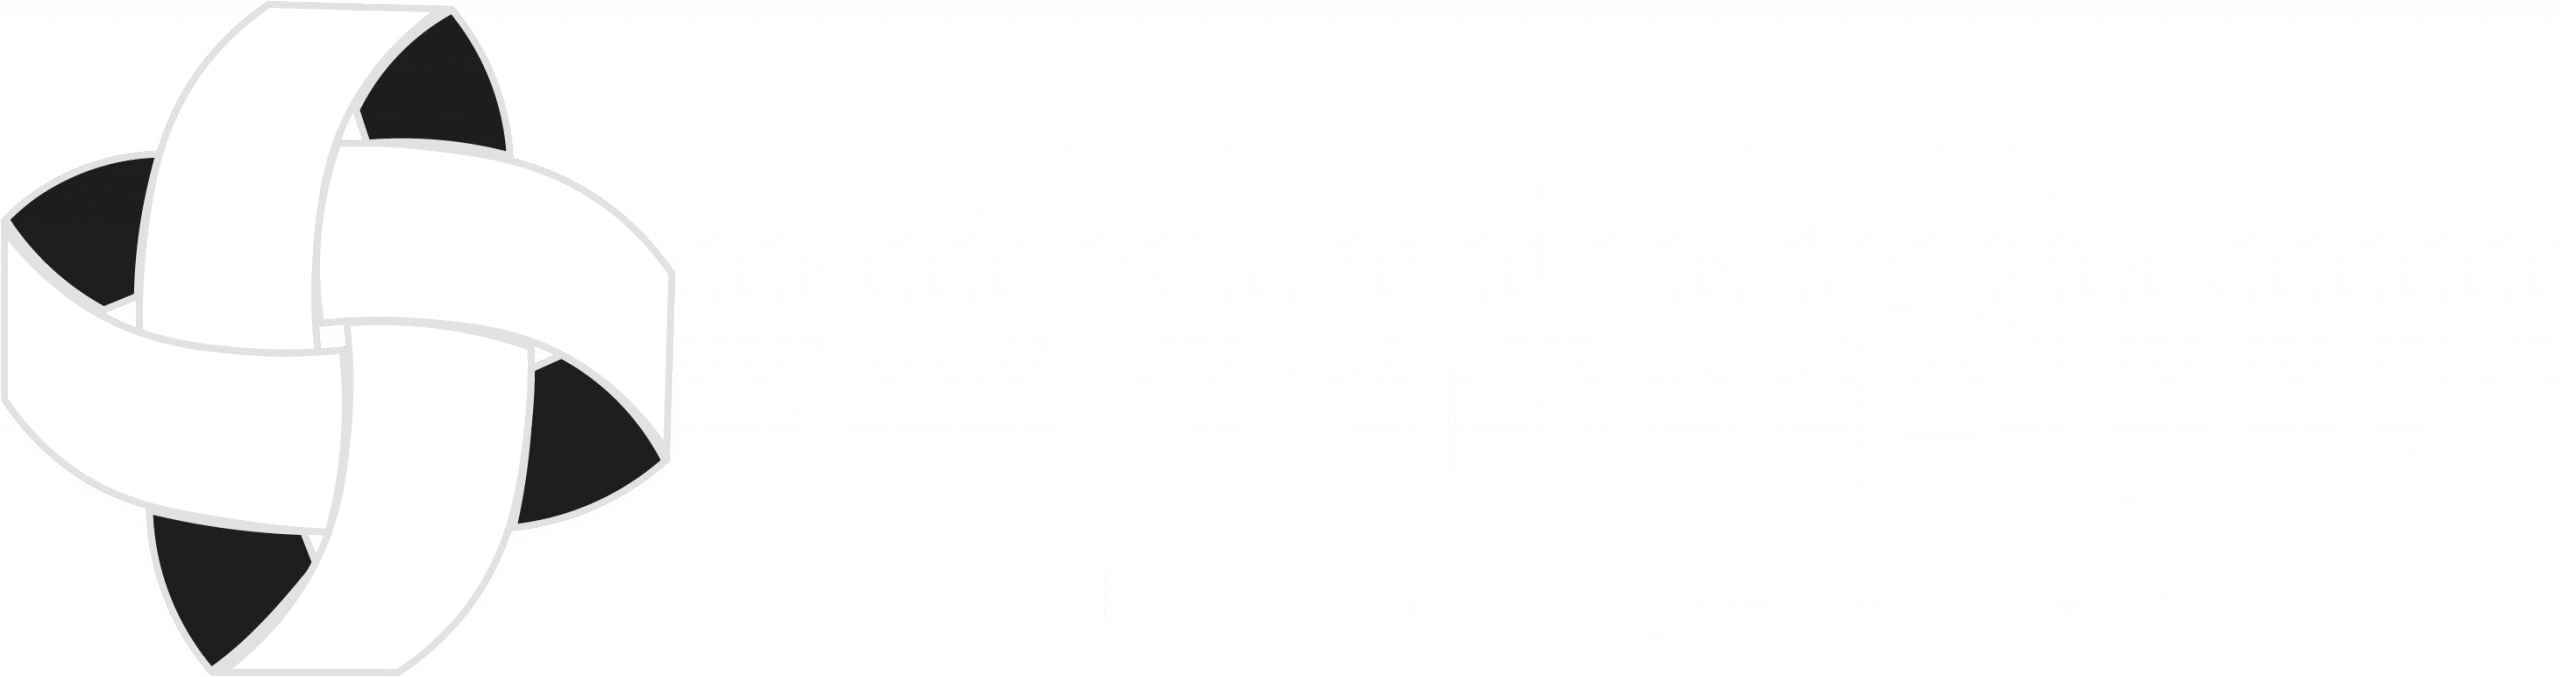 Platinum Creditplus Lending Corp.Proof of Payment